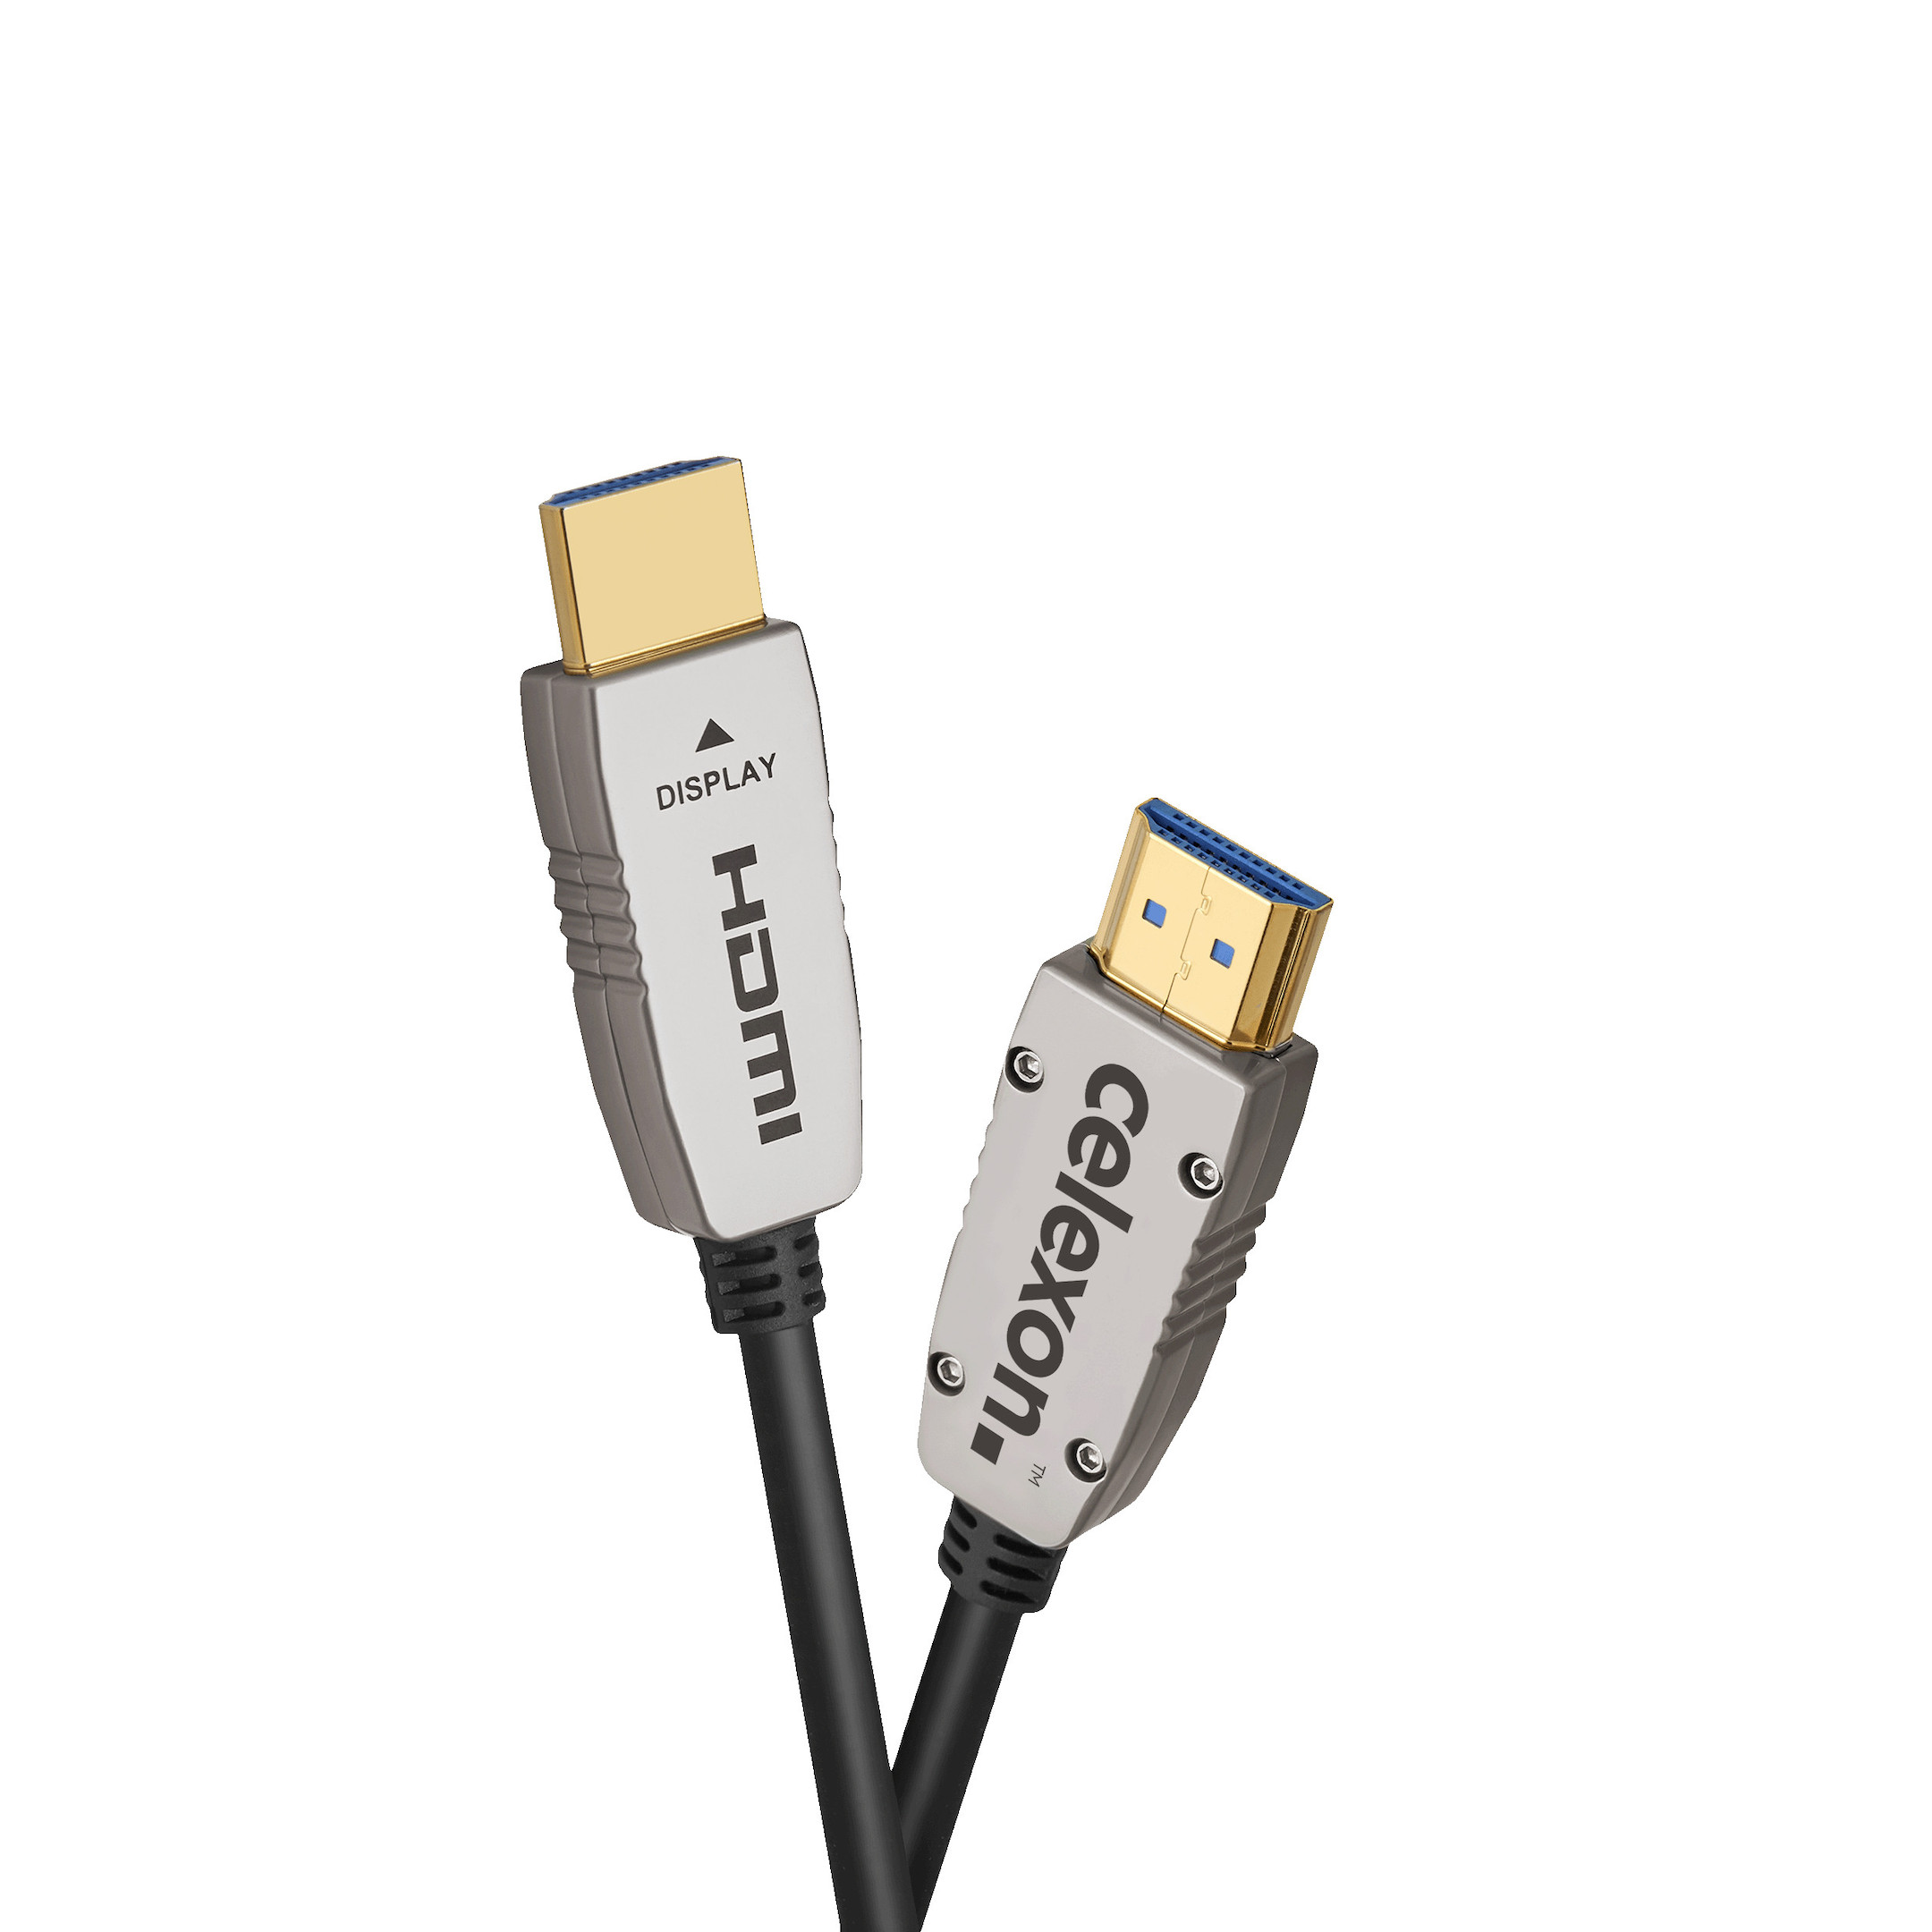 celexon-UHD-Optical-Fibre-HDMI-2-1-8K-Active-Kabel-20m-schwarz